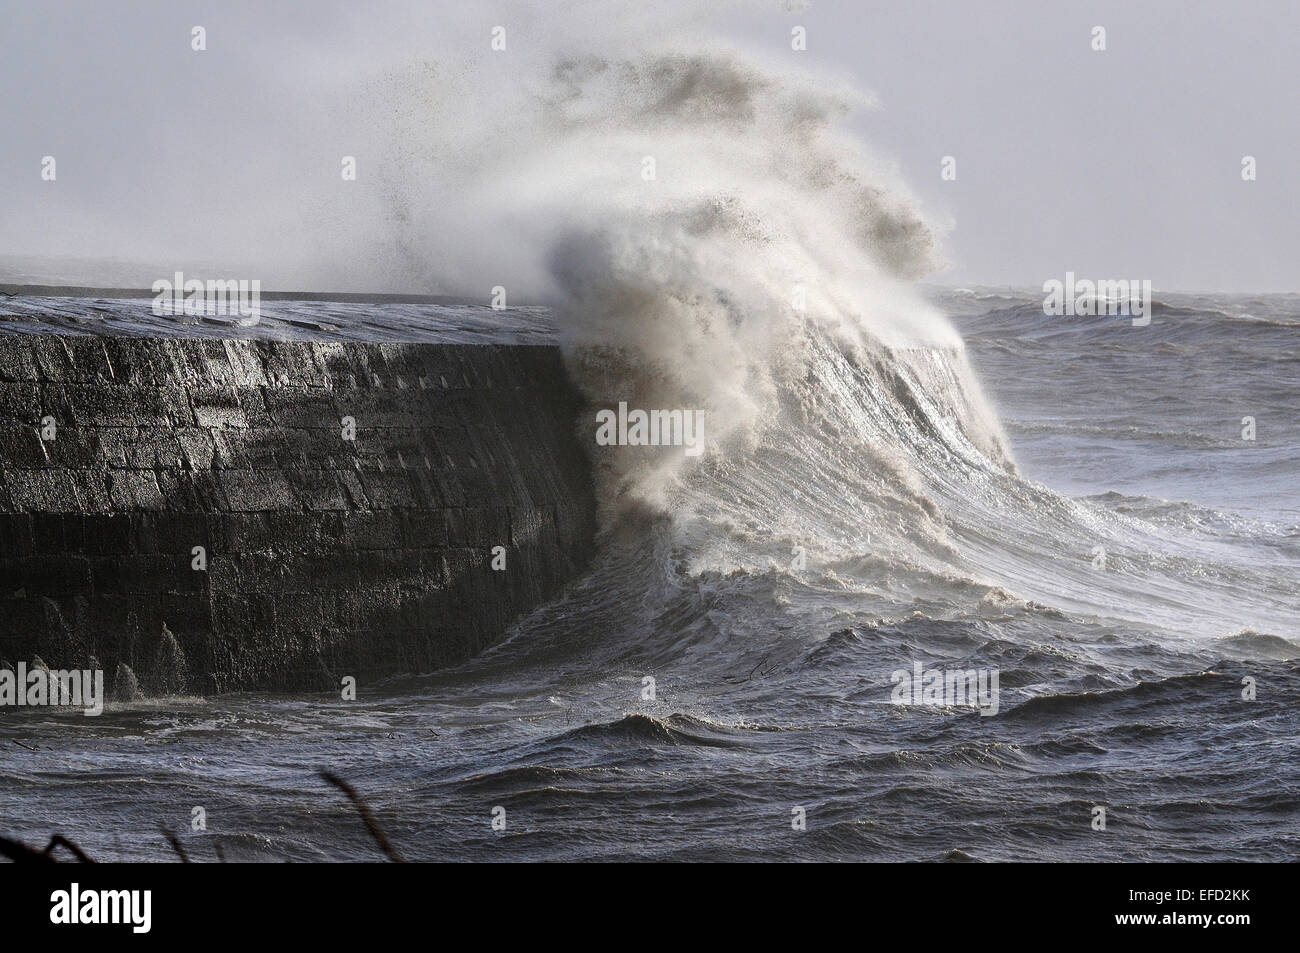 The Cobb, Lyme Regis, Dorset with waves crashing over it. Stock Photo